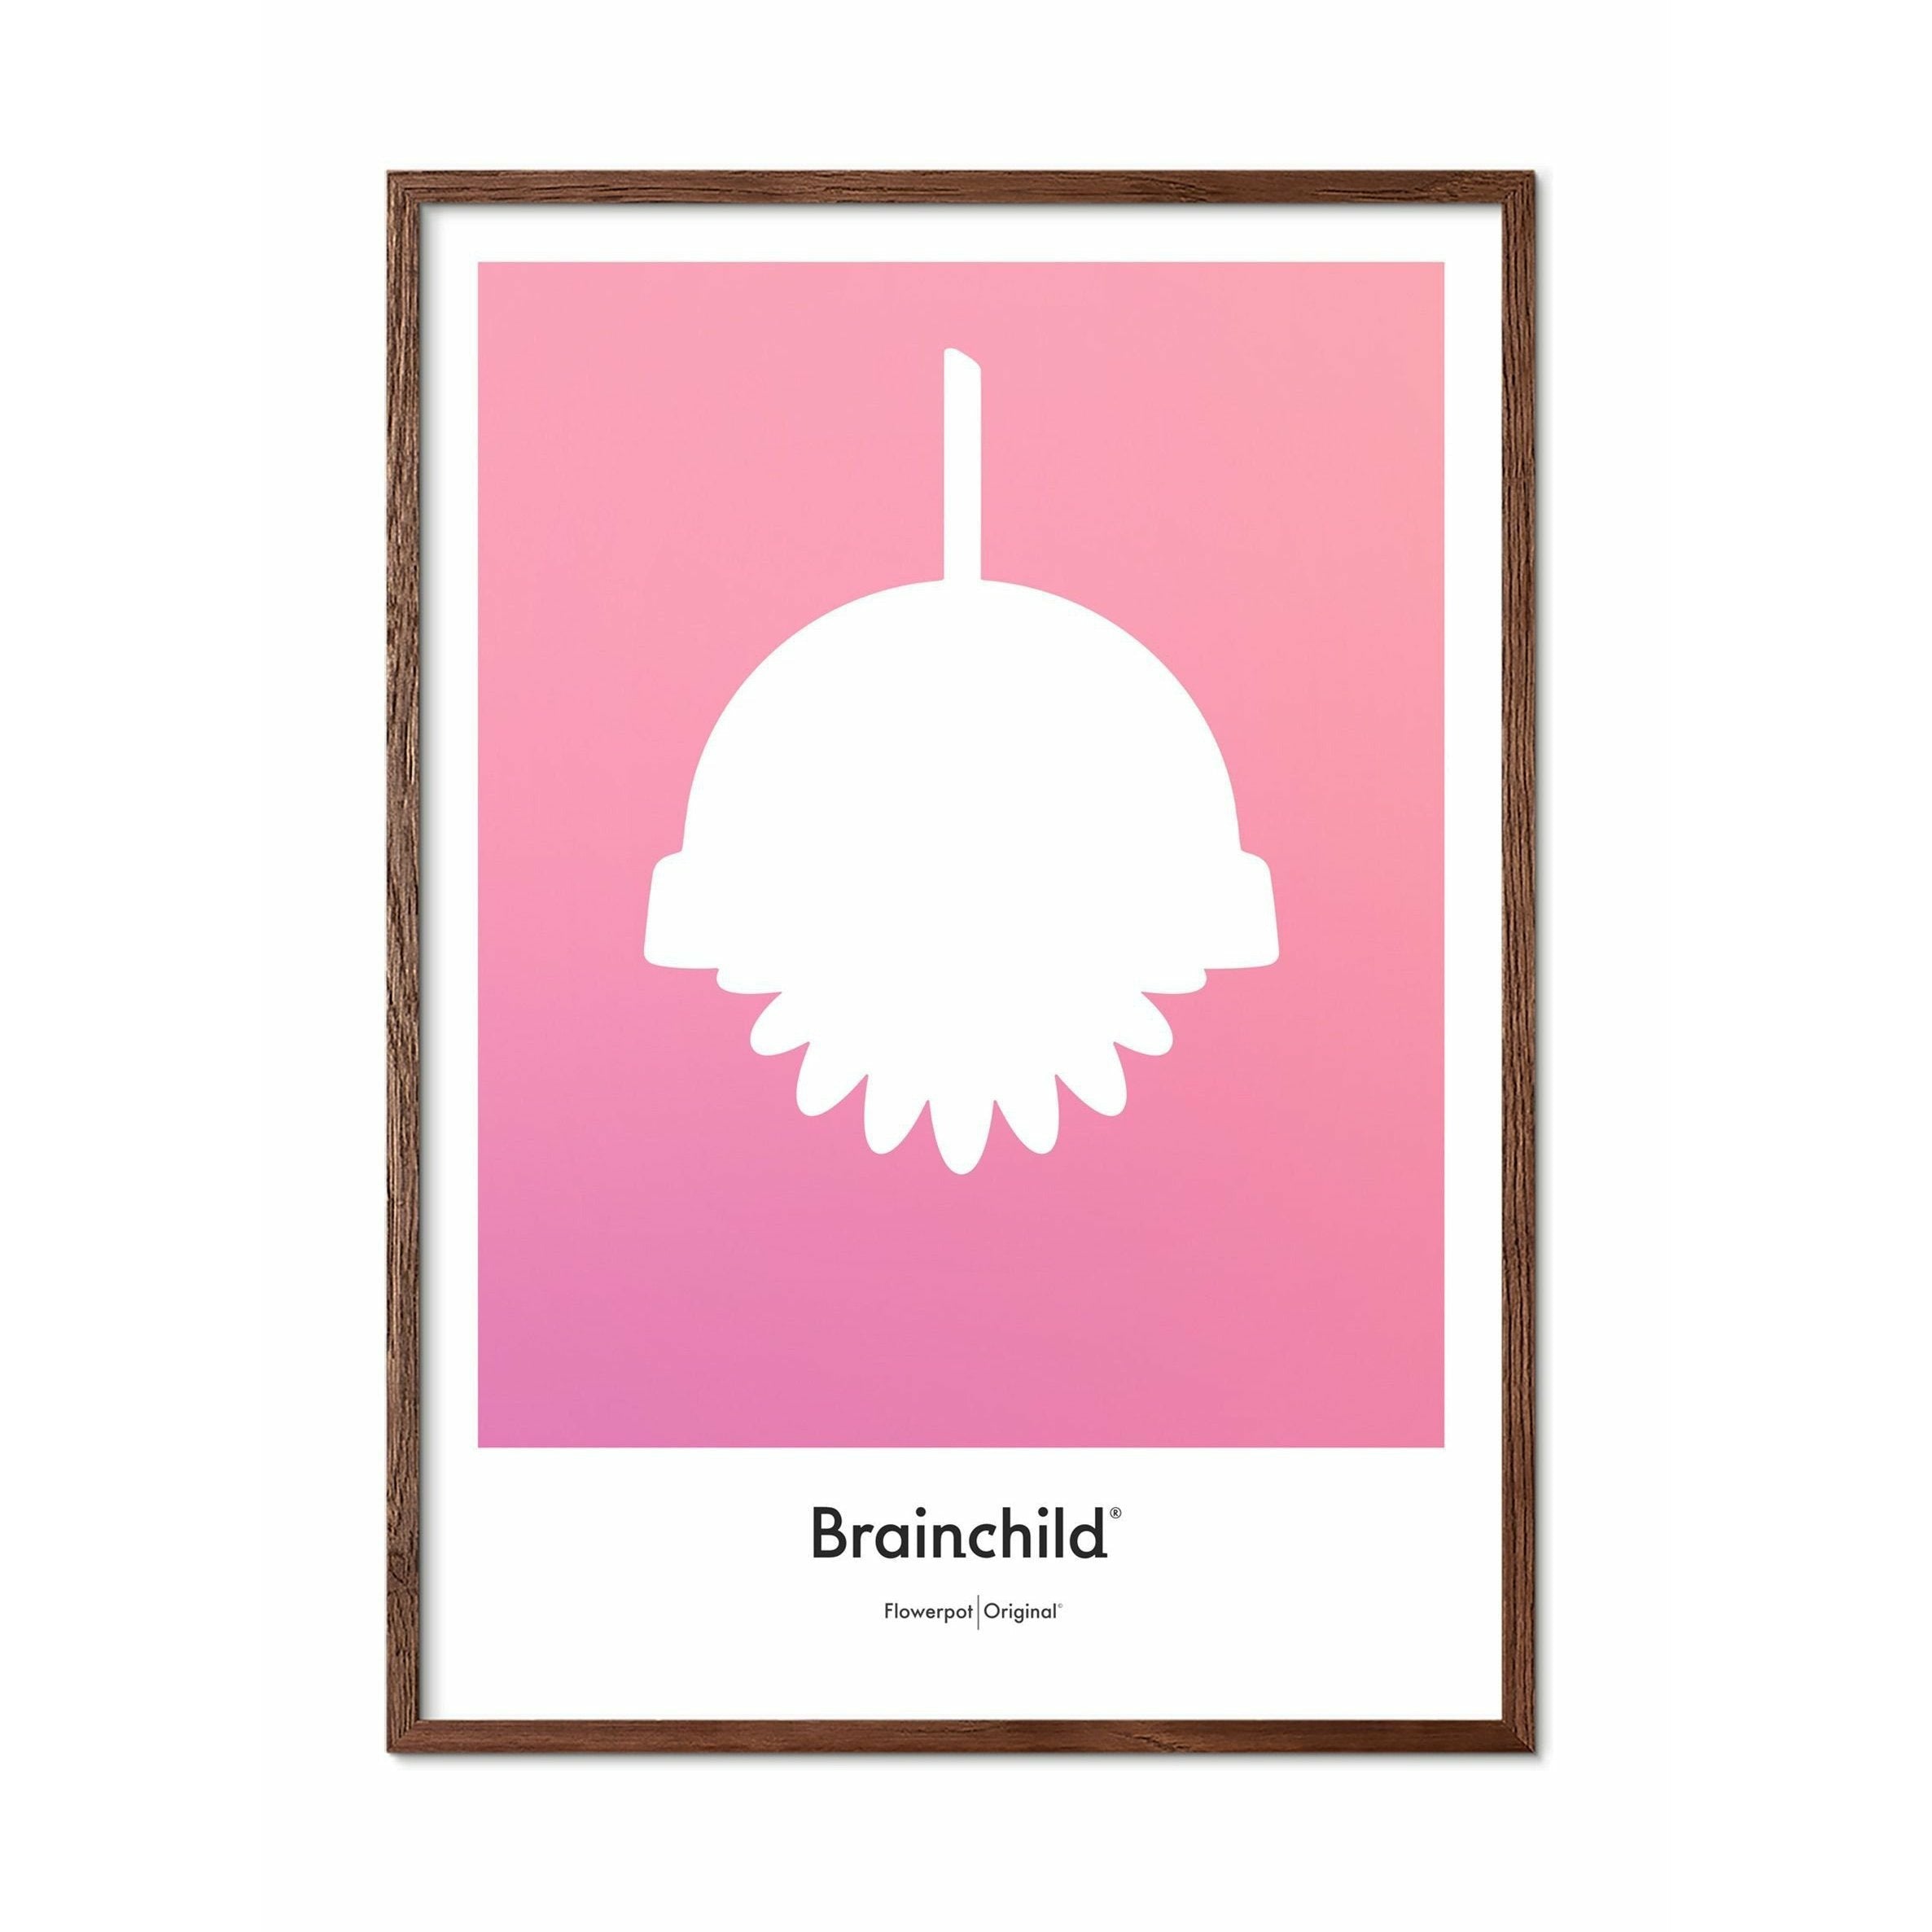 Brainchild Blumentopf Design Icon Poster, dunkler Holzrahmen A5, rosa